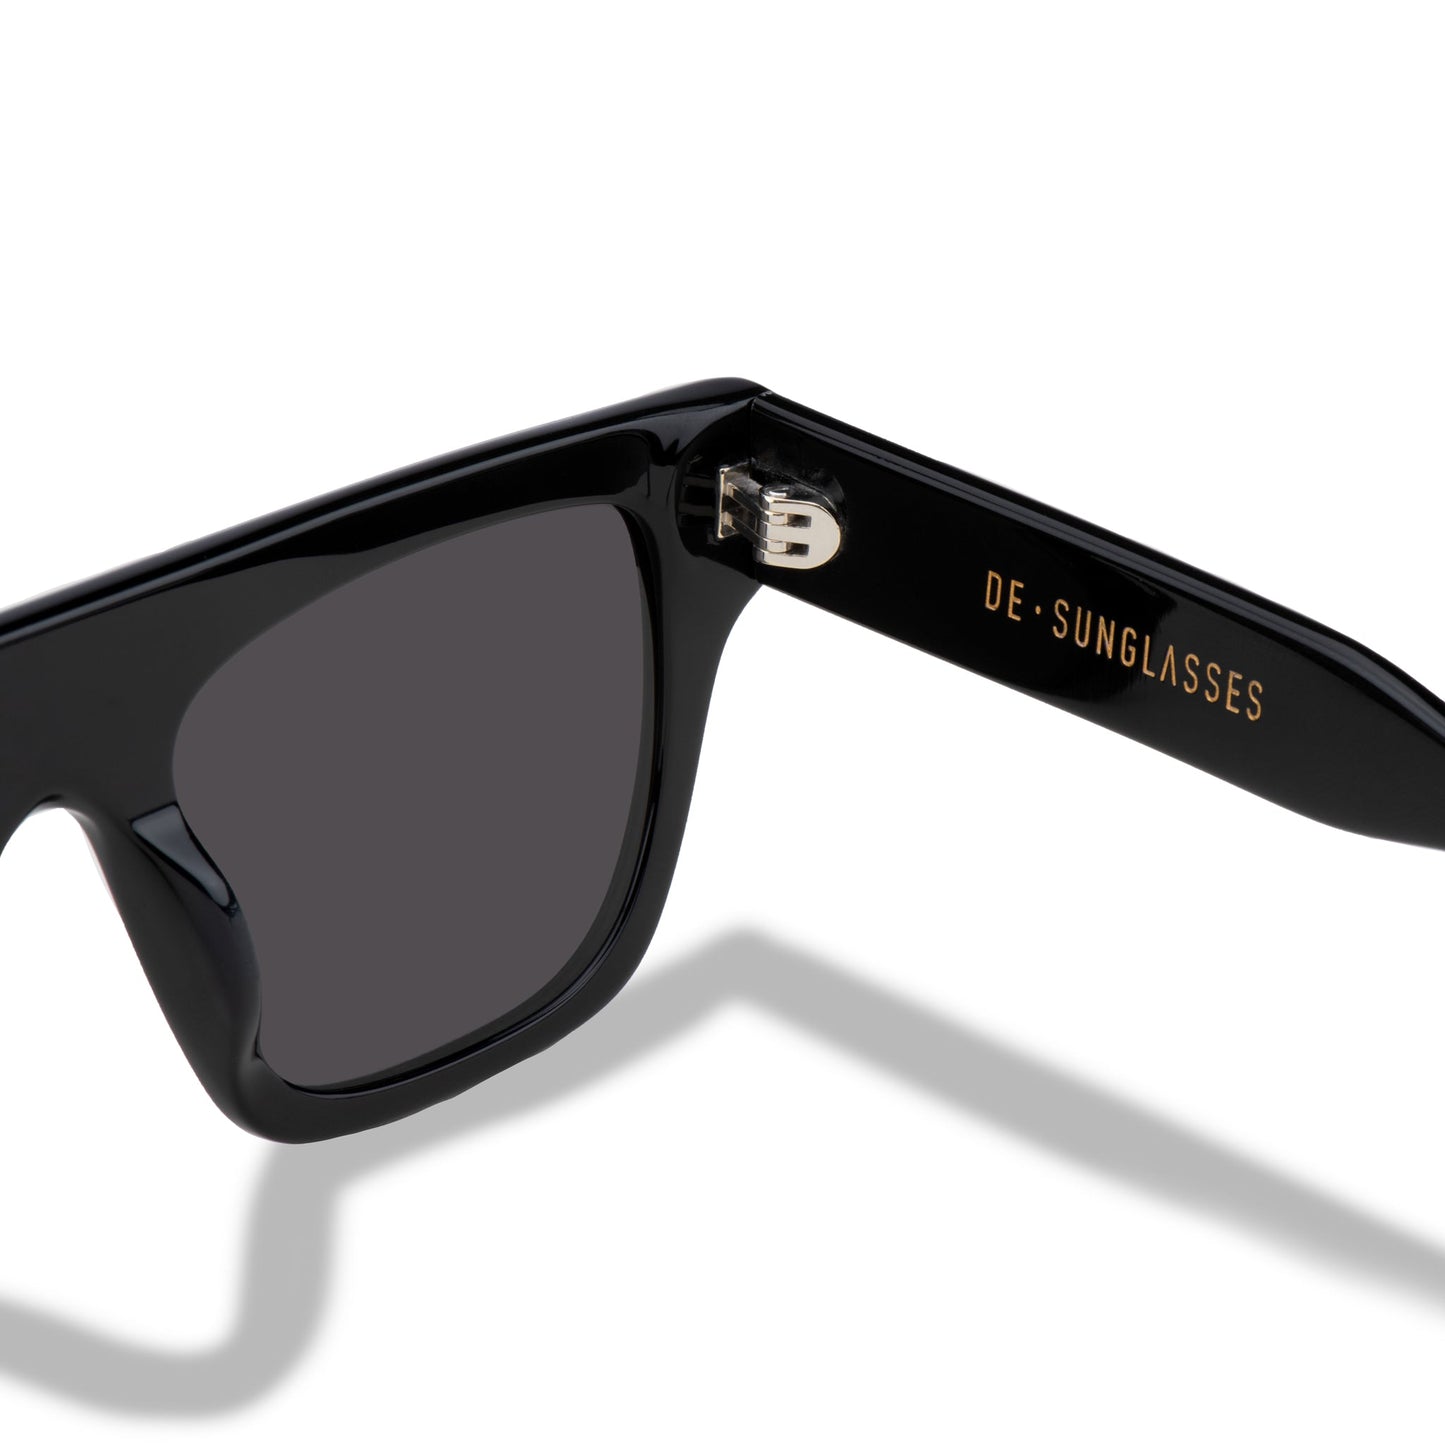 Tokyo Black De-sunglasses logo